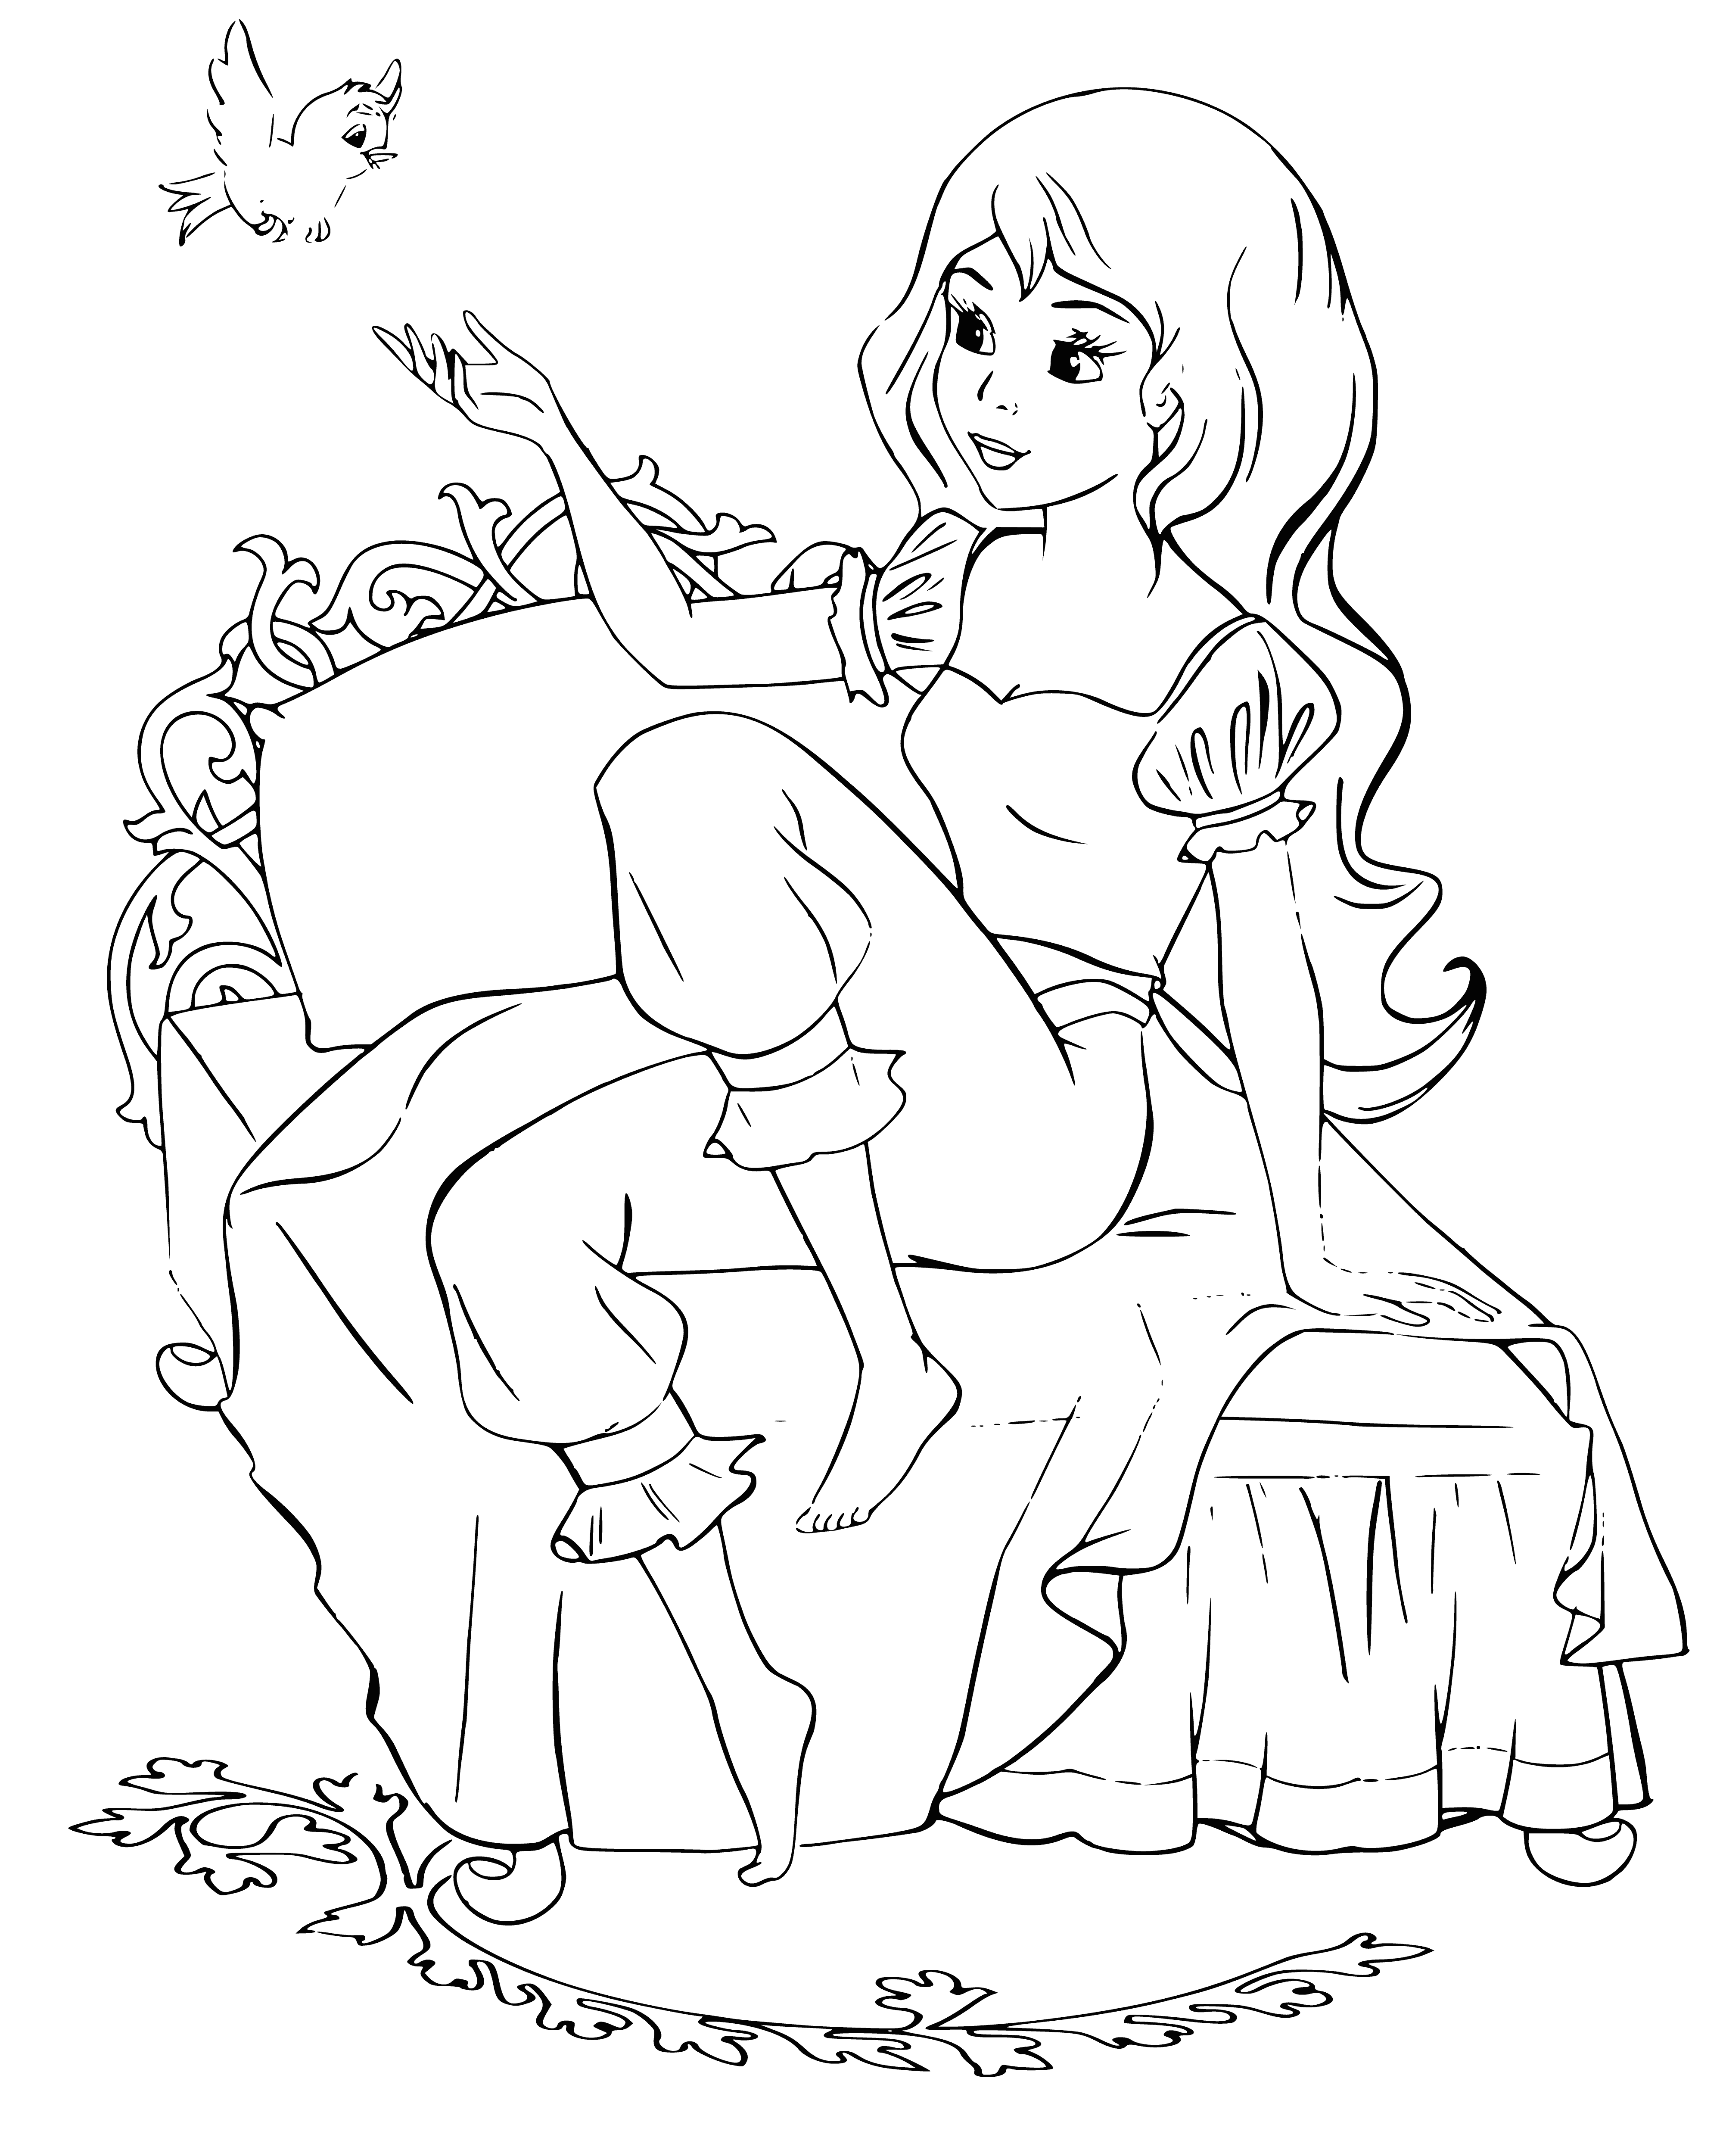 The princess wakes up coloring page